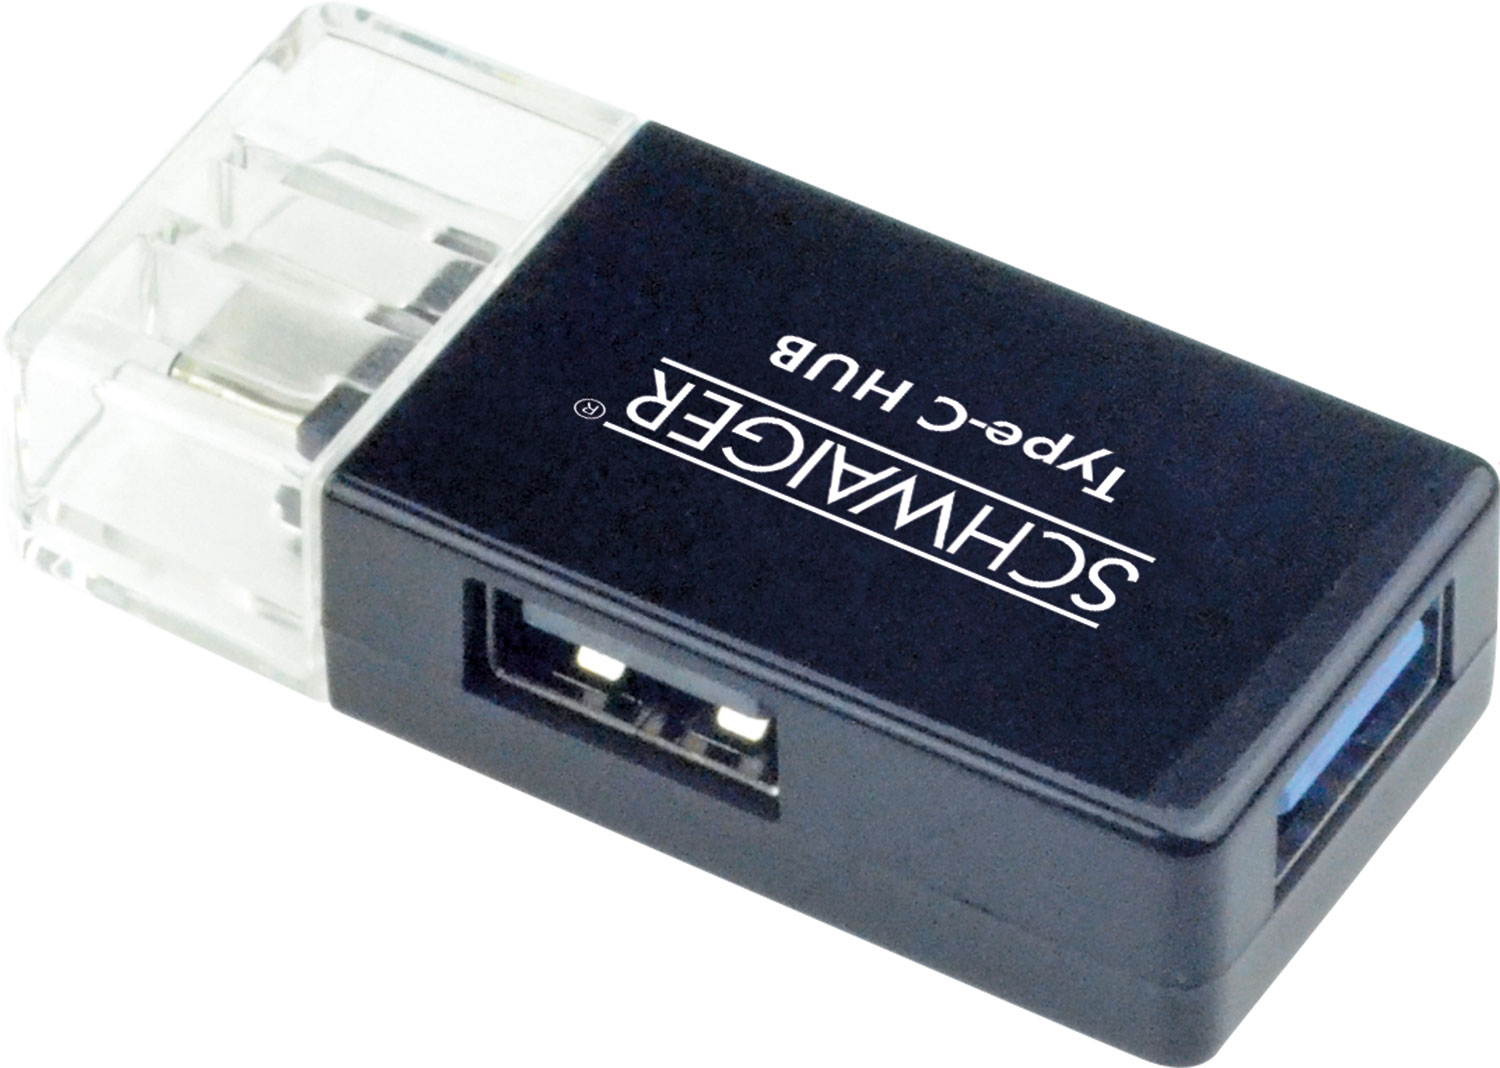 USB 533- 3.1 -CAU314 Adapter SCHWAIGER